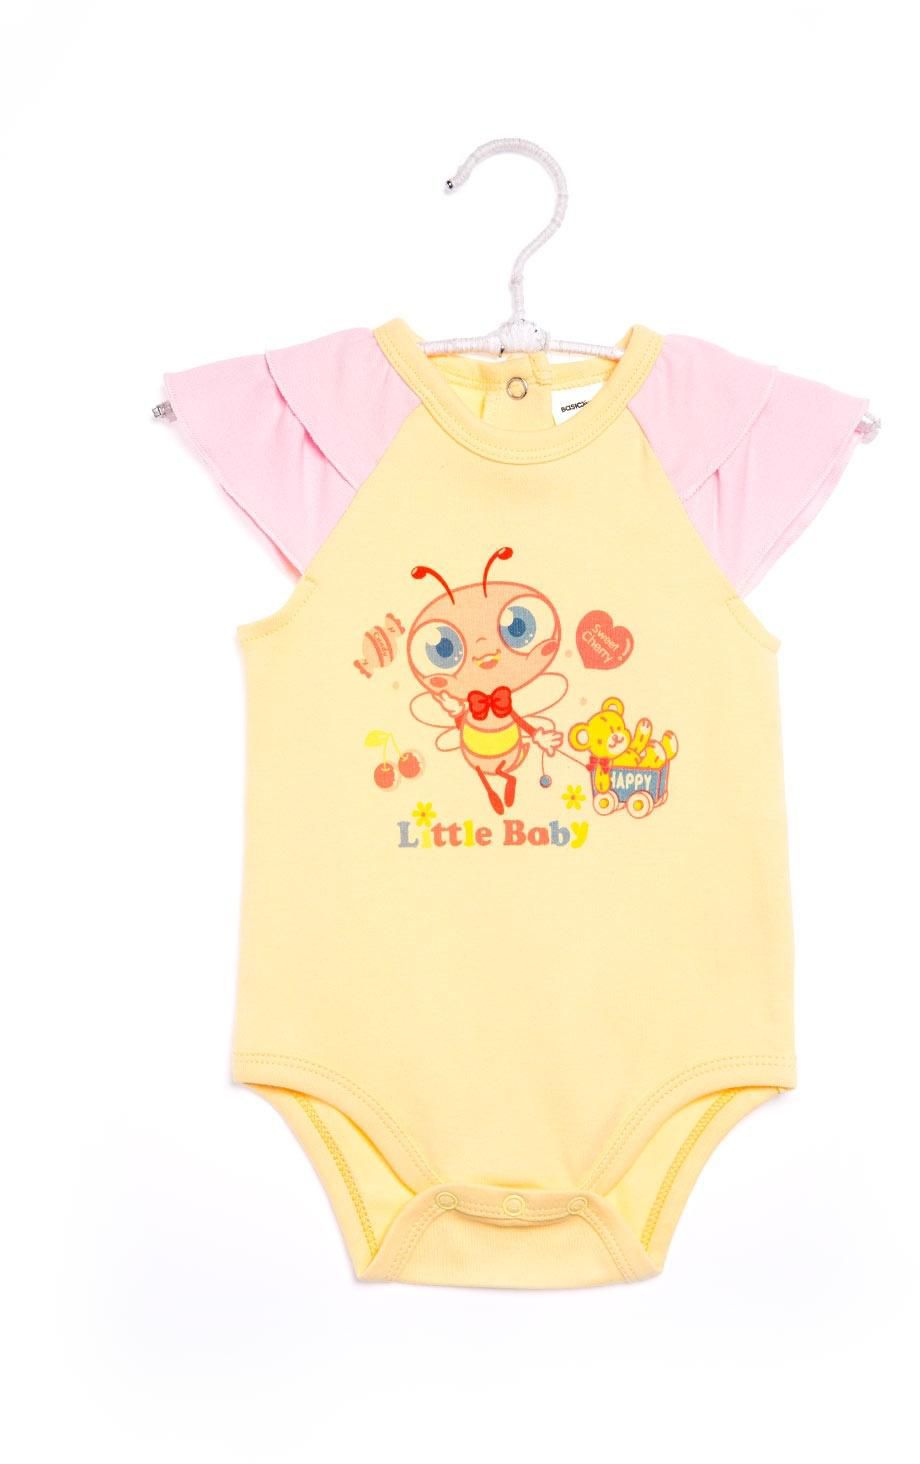 Basicxx Infant Girls Yellow Bodysuit Size 6-9 Months